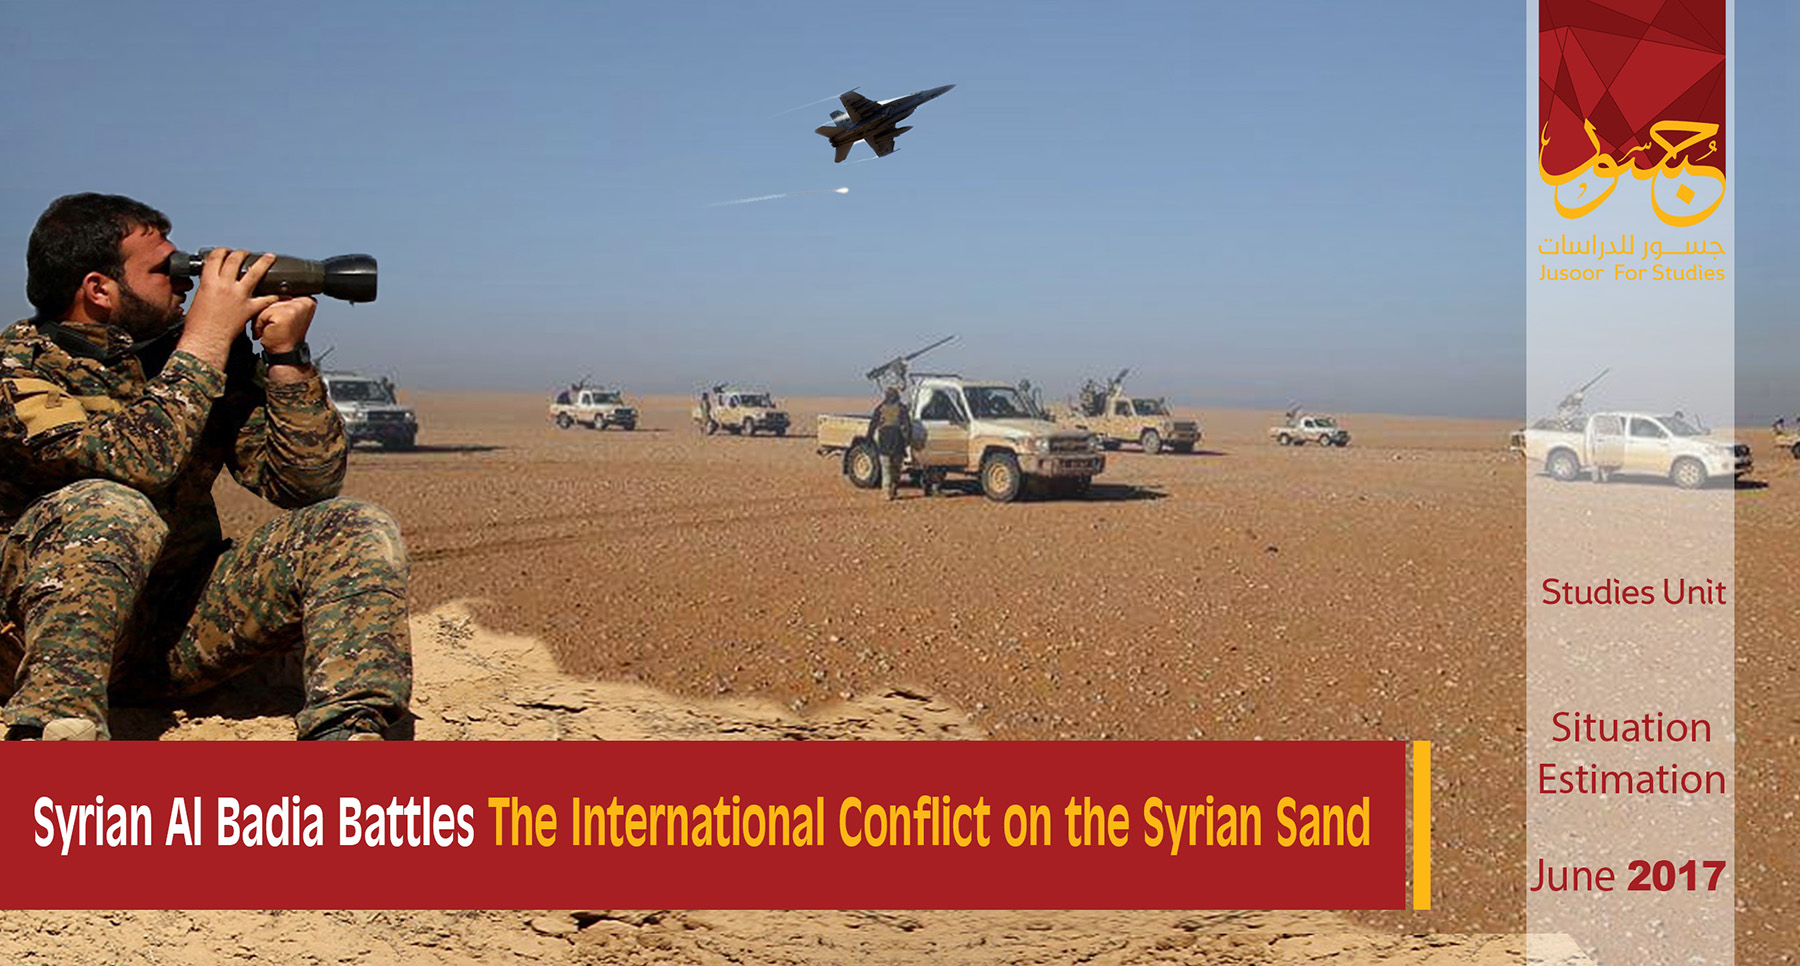 Syrian Al Badia Battles The International Conflict on the Syrian Sand